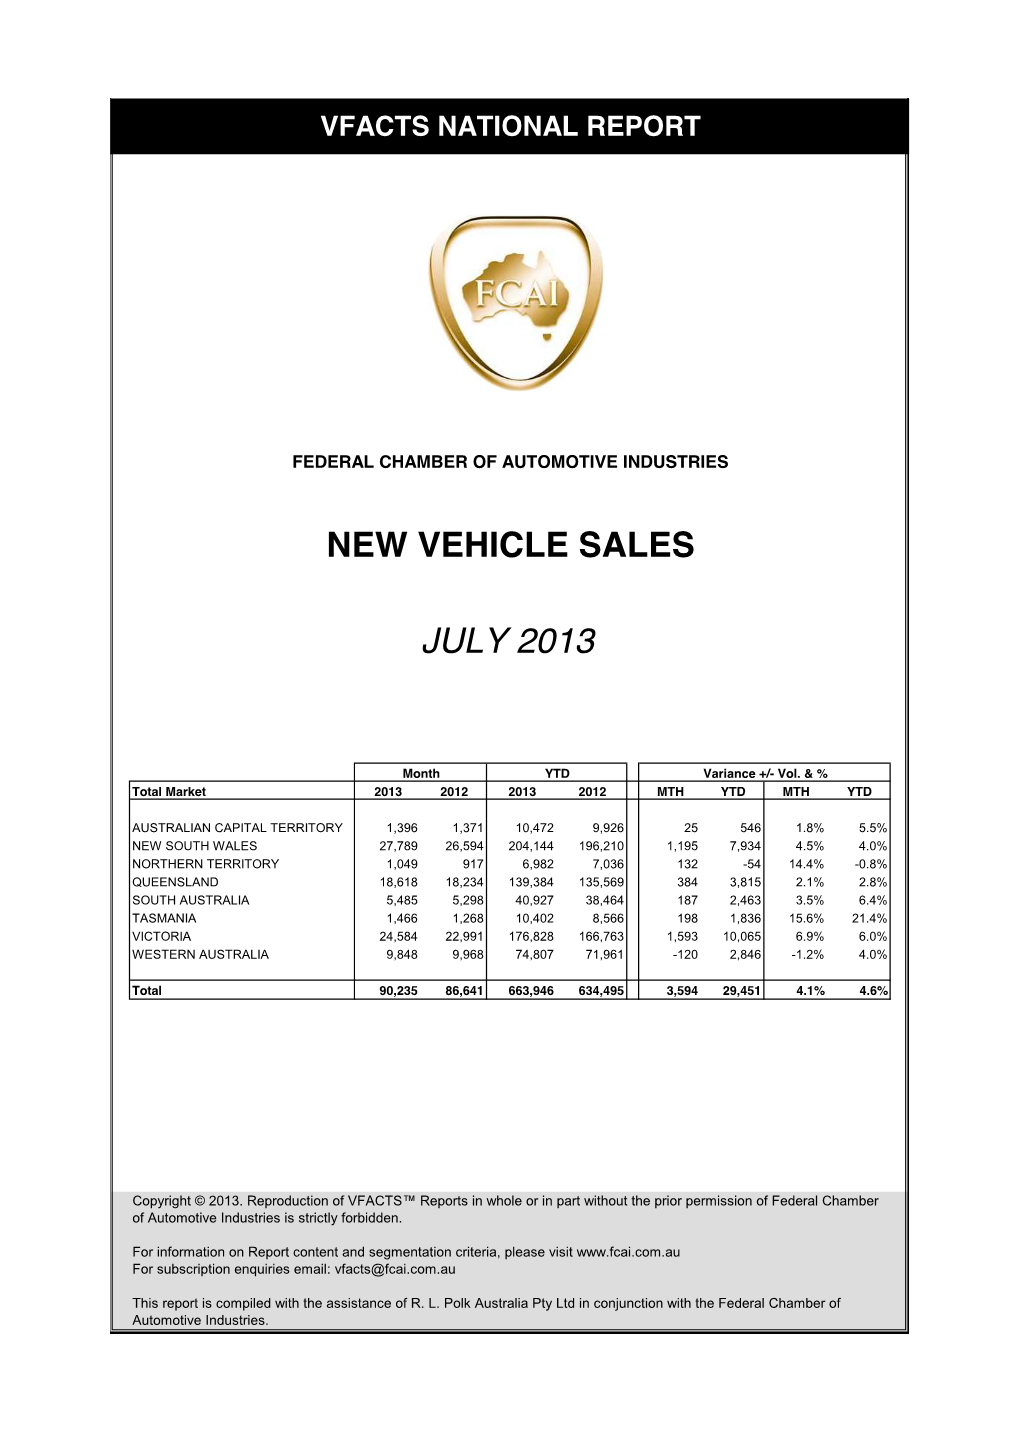 New Vehicle Sales July 2013